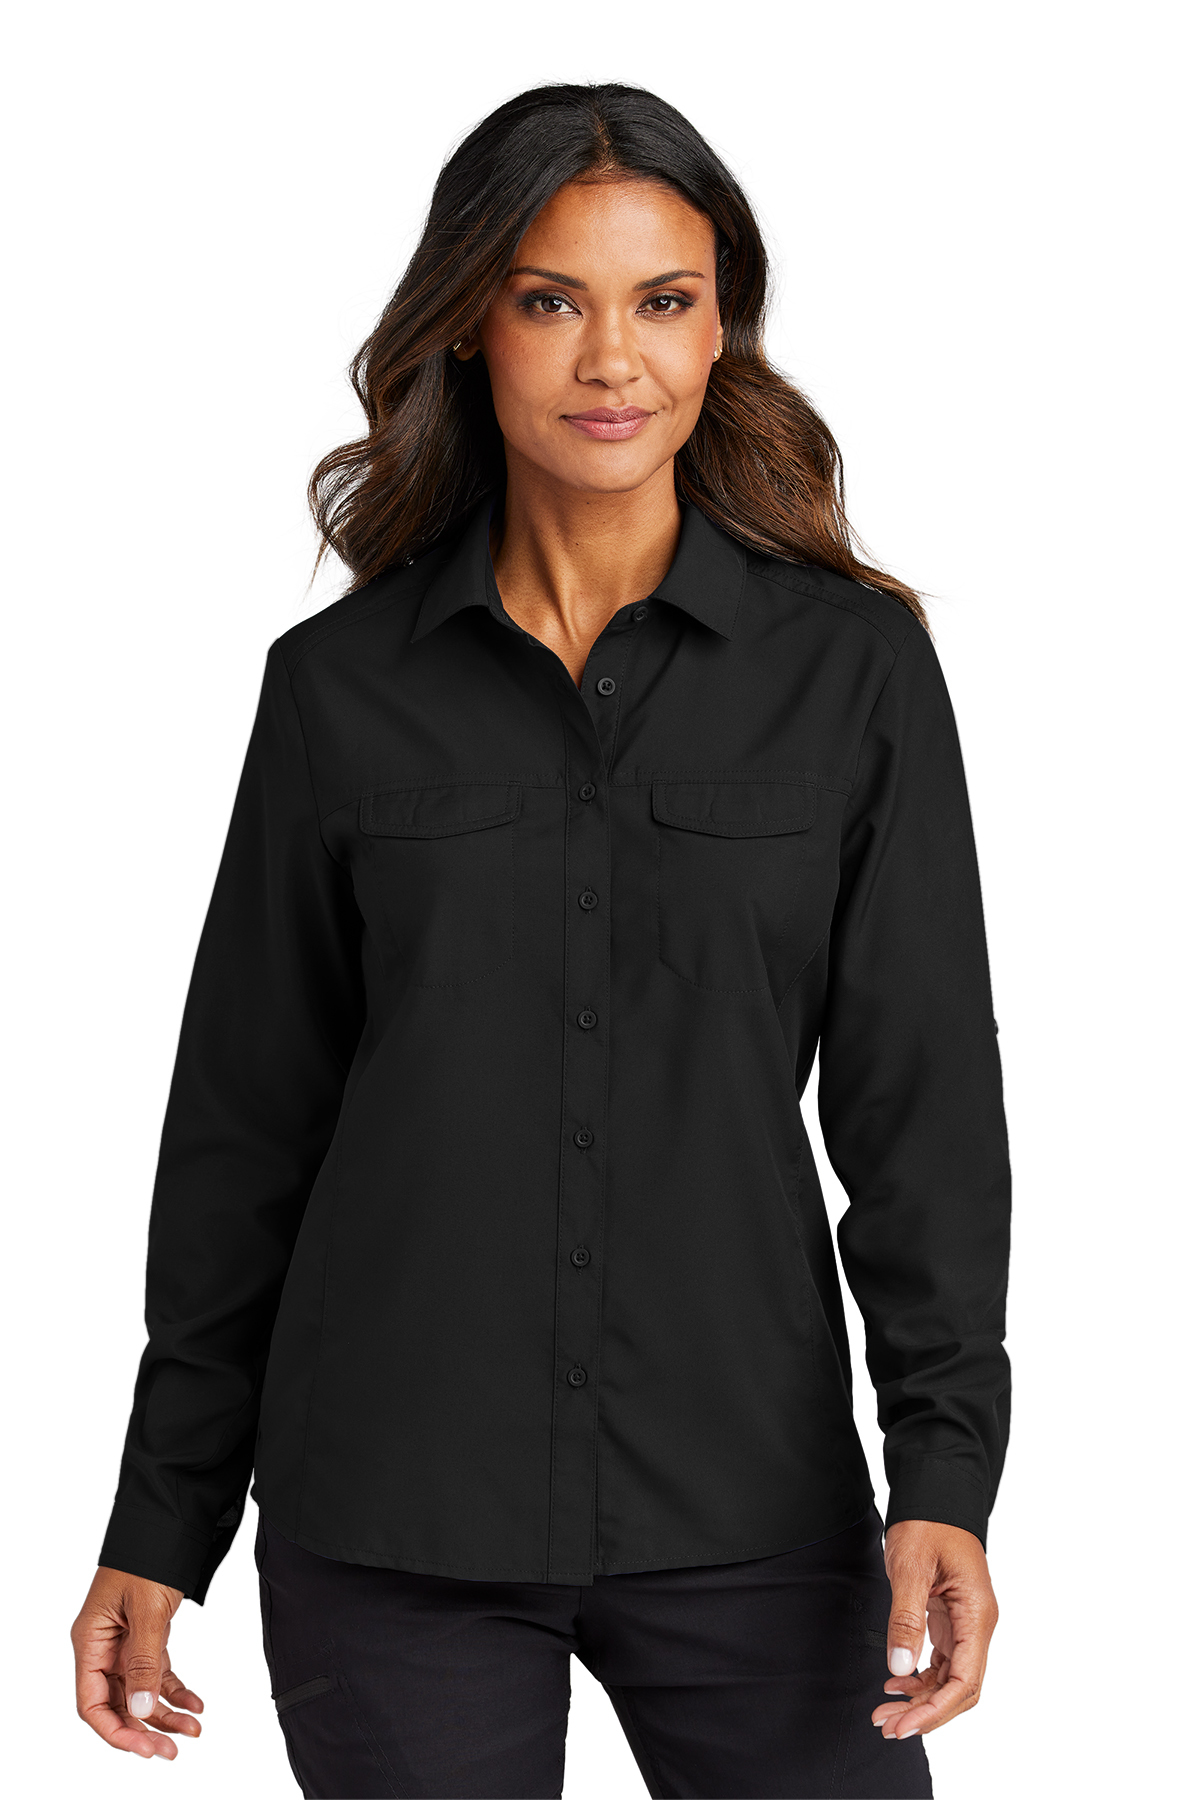 Port Authority Ladies Long Sleeve UV Daybreak Shirt | Product | SanMar